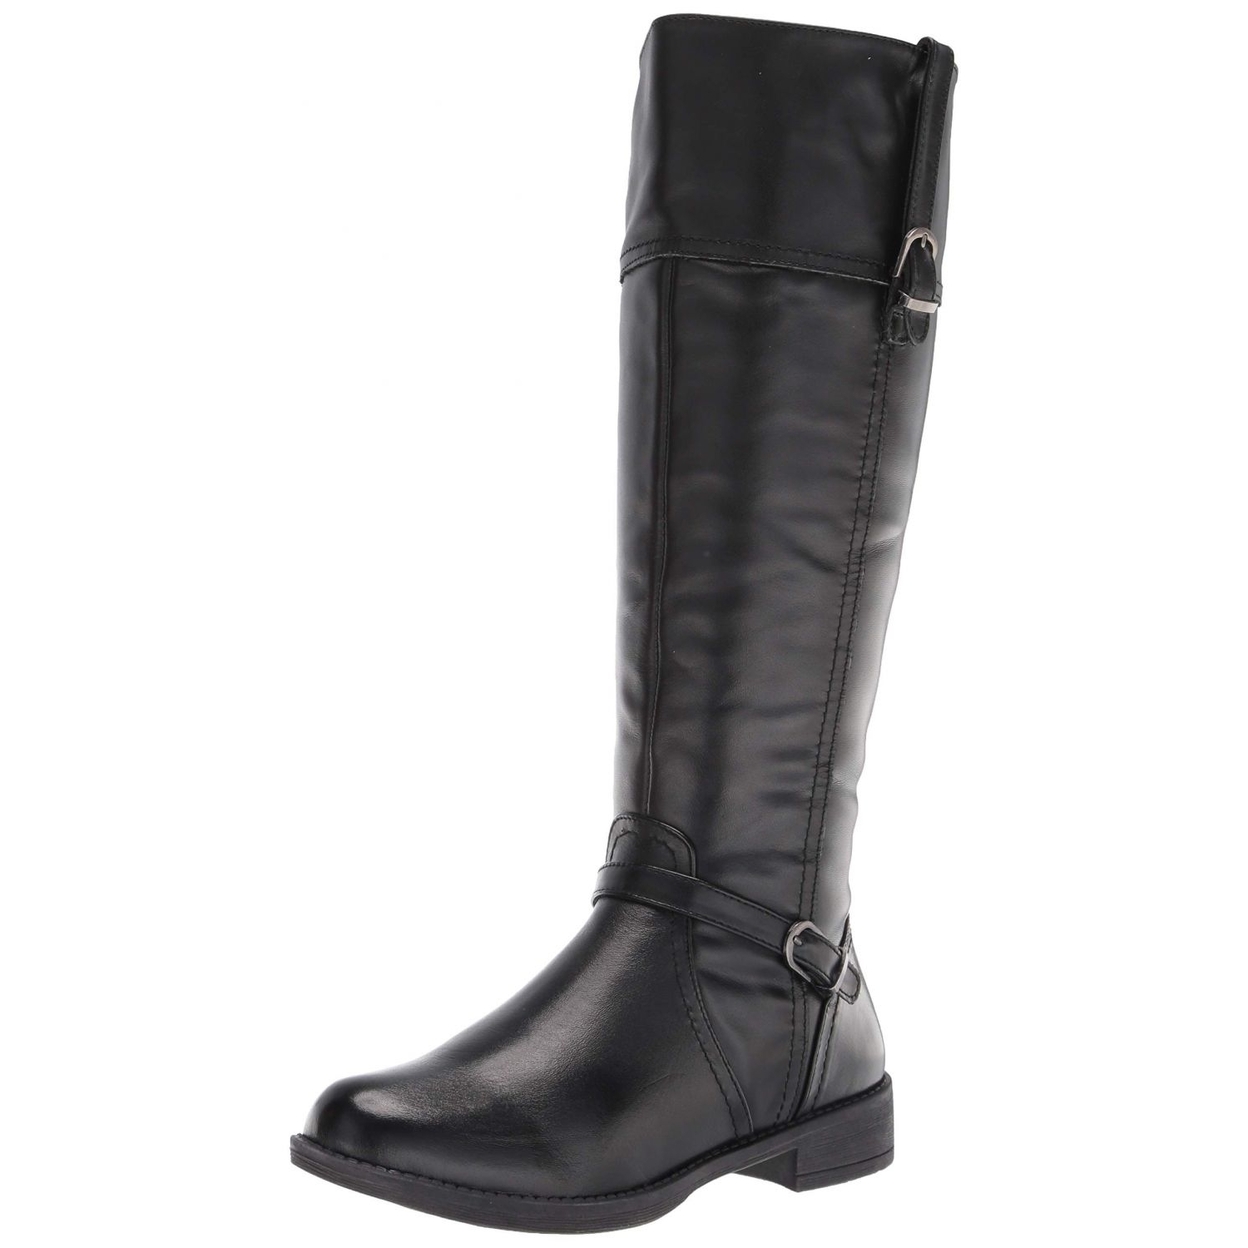 Propet Womens Tasha Zippered Casual Boots Knee High Low Heel 1-2 - Black BROWN - BROWN, 8 Wide